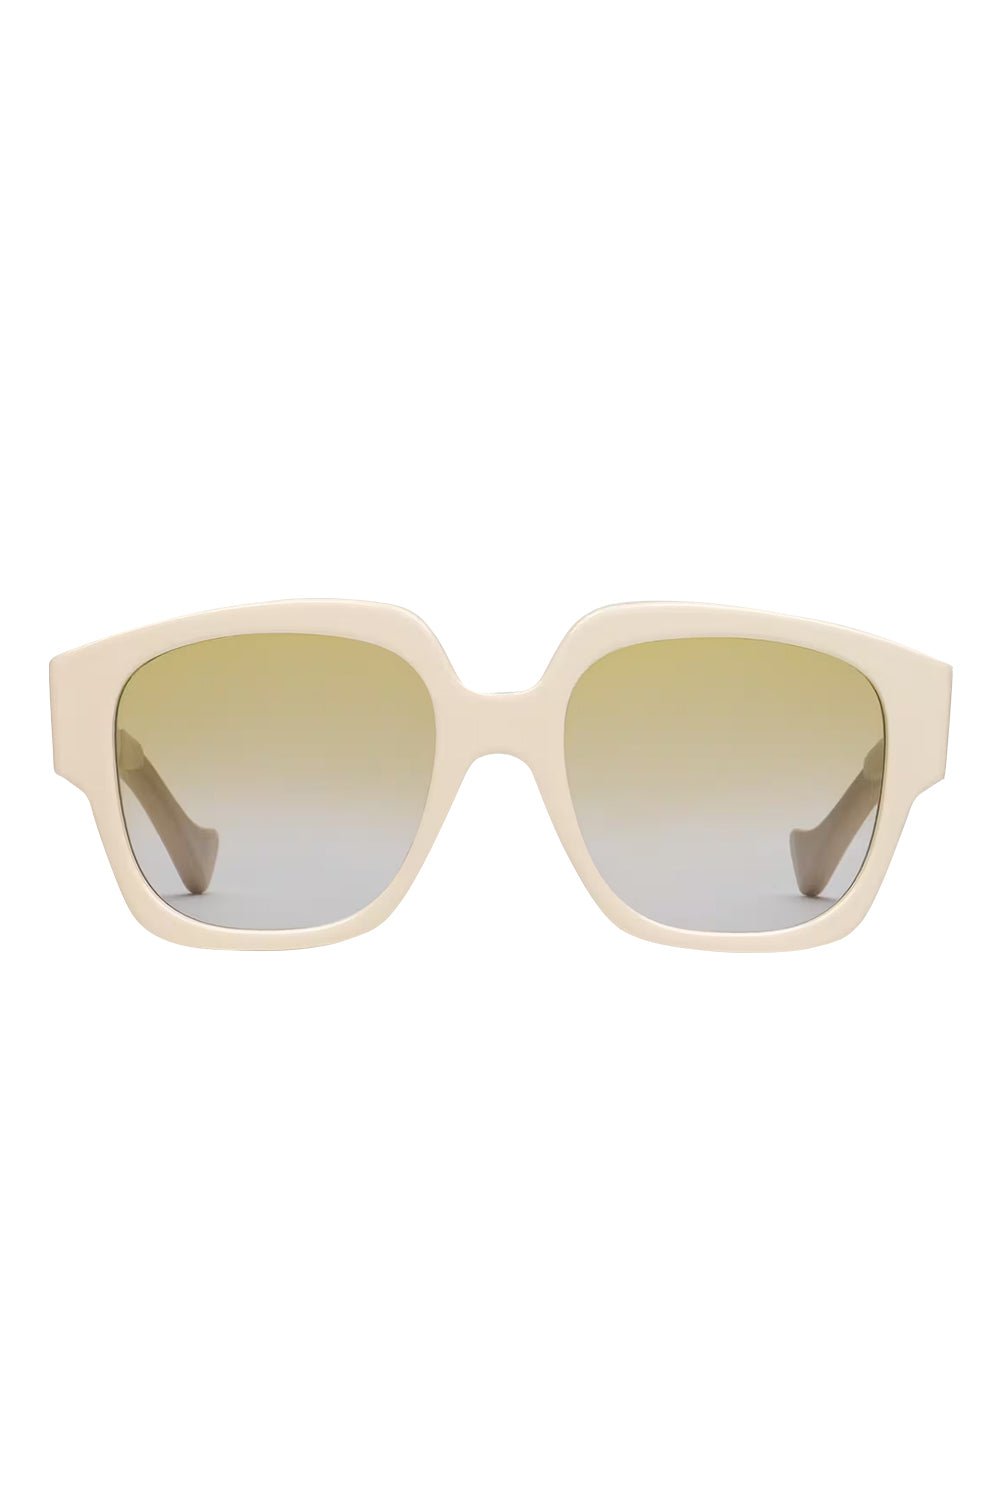 GUCCI-Squared Frame Sunglasses-YELLOW/WHITE